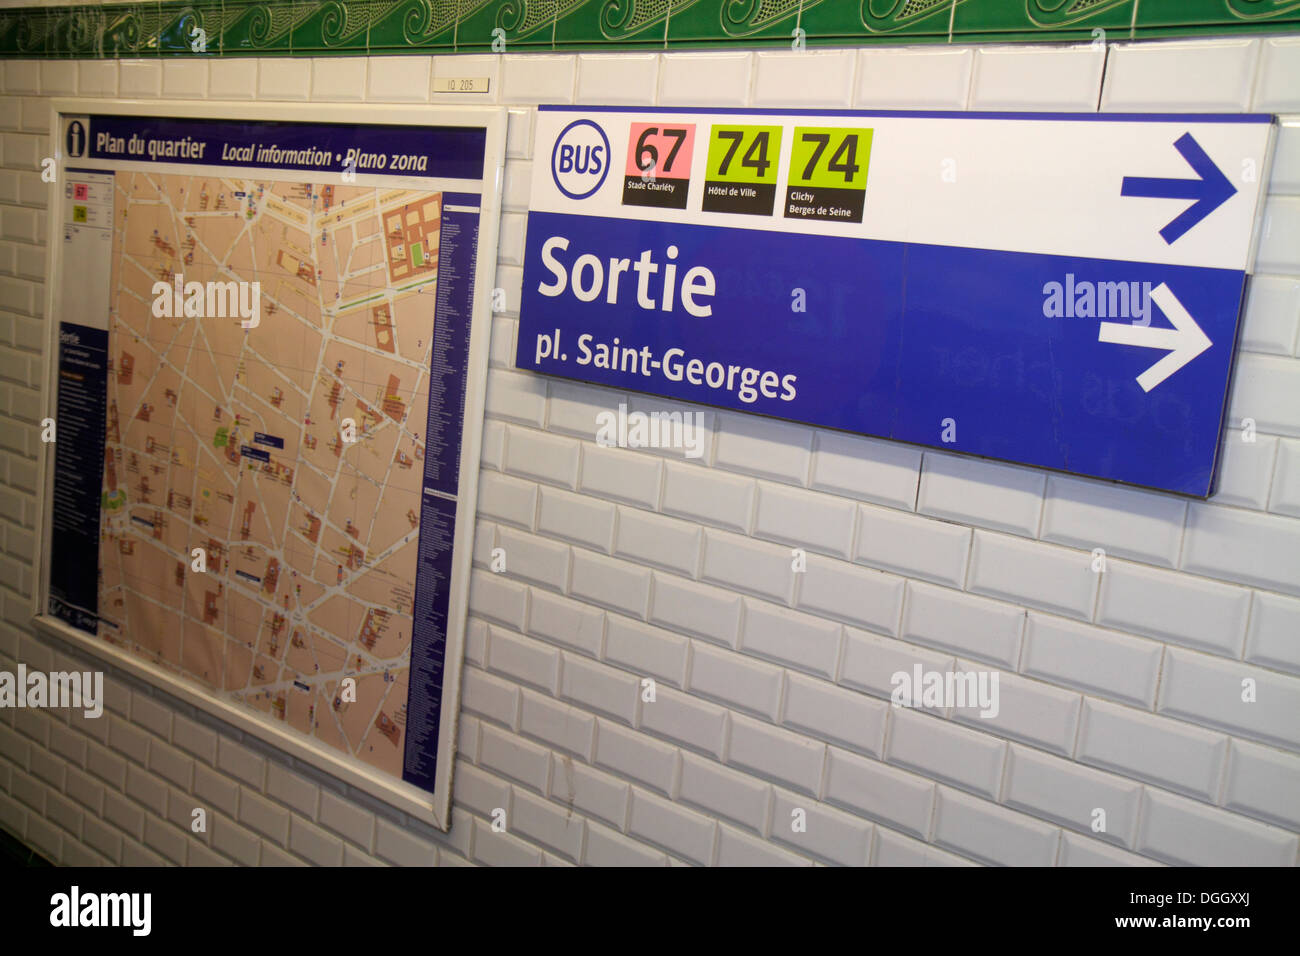 Paris France,Saint St. Georges,Metro Station,subway,train,street map,sign,directions,arrow,platform,France130814017 Stock Photo